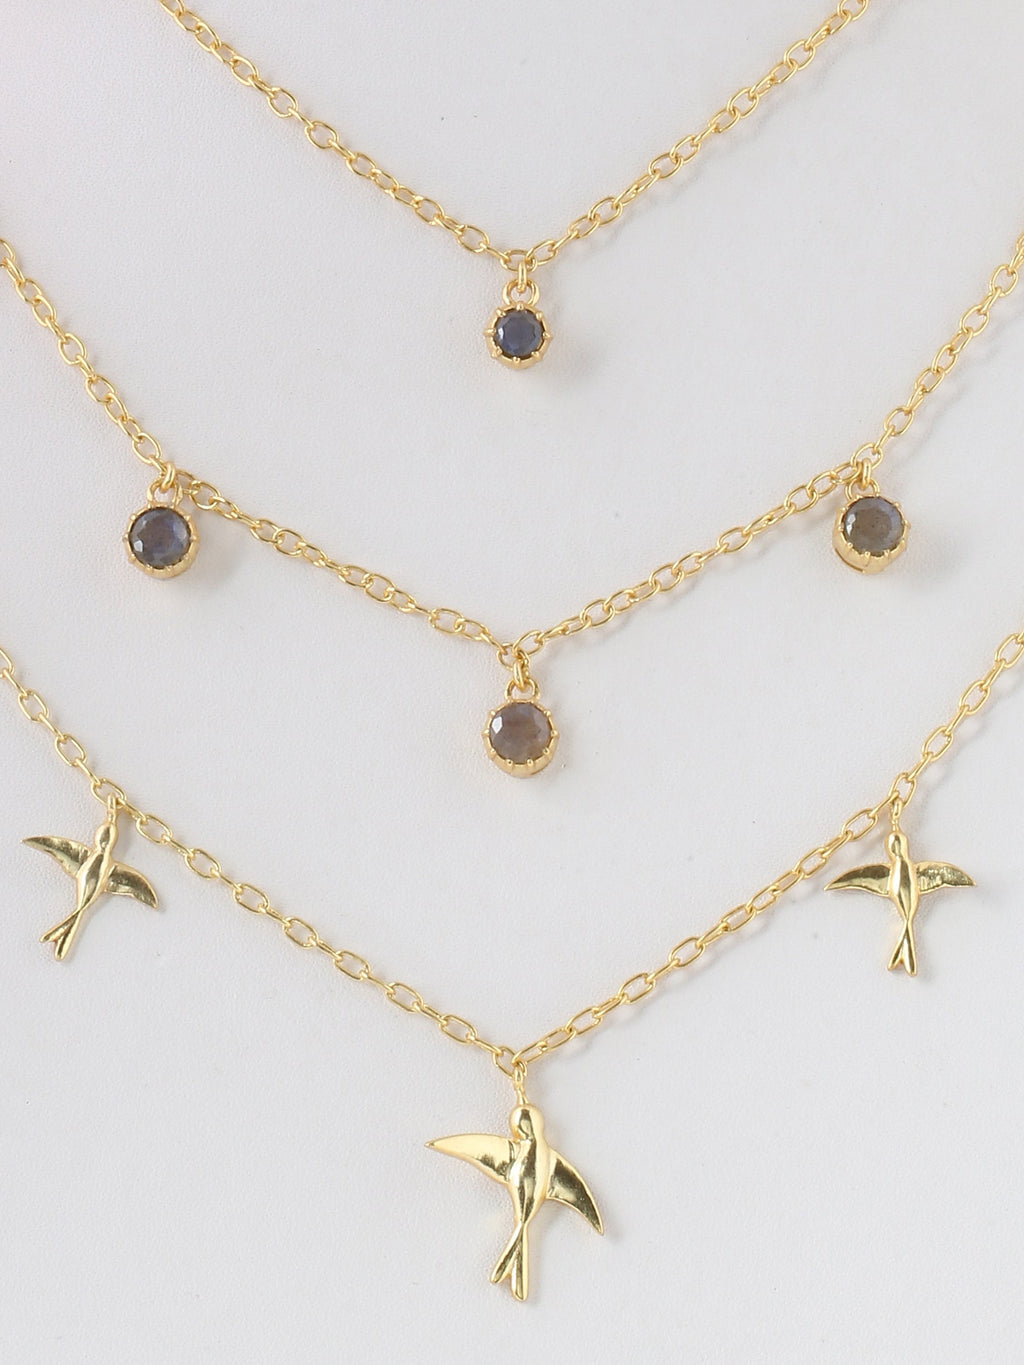 Multi Strand Birdy Chain Necklace.